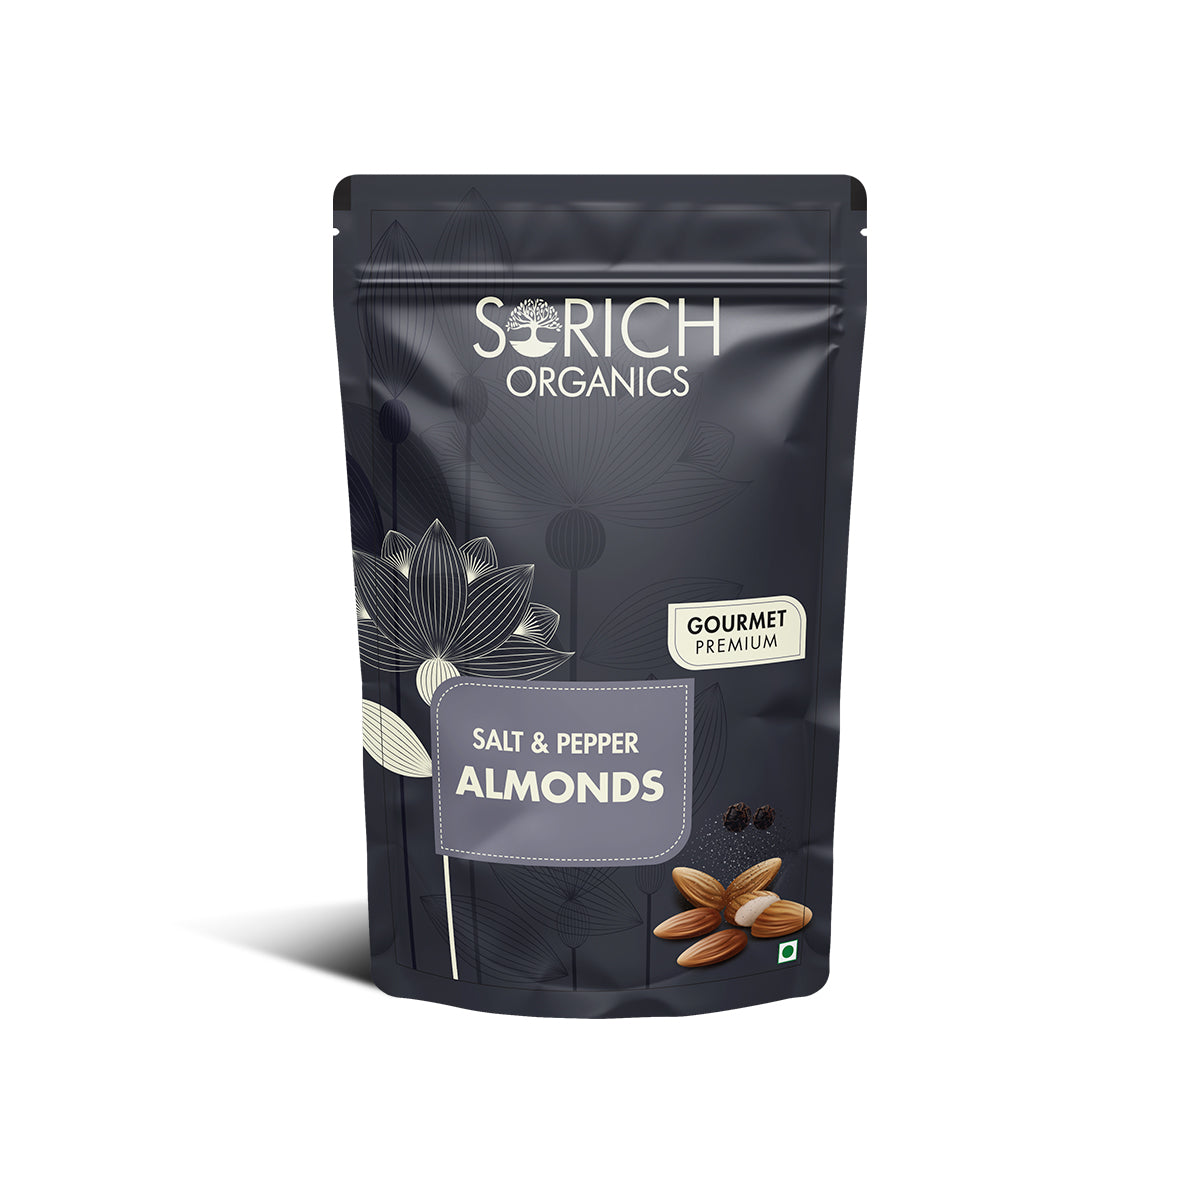 salted almonds health benefits